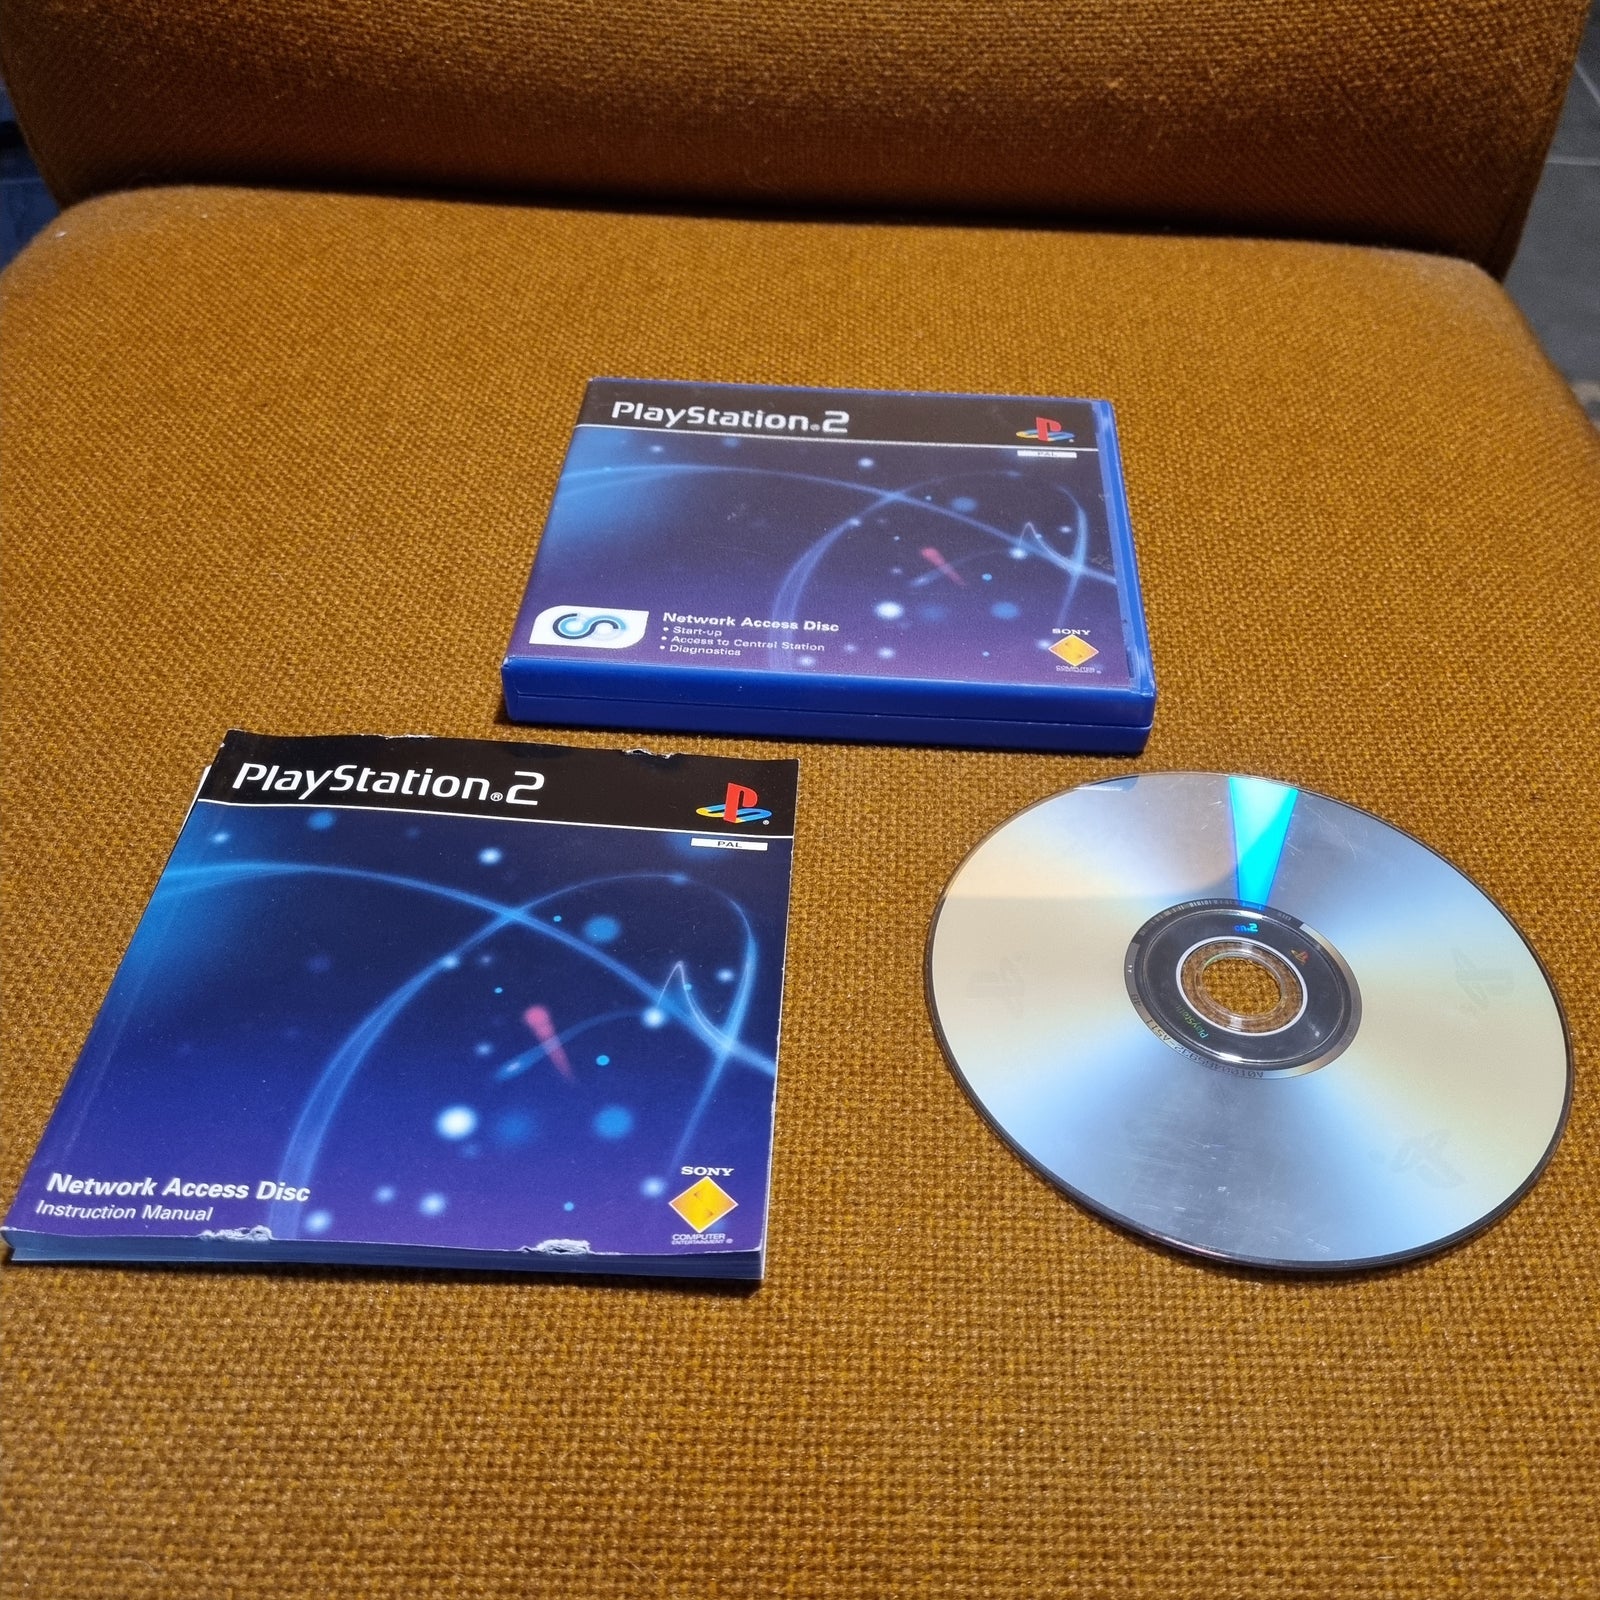 Network access disc, PS2, anden genre